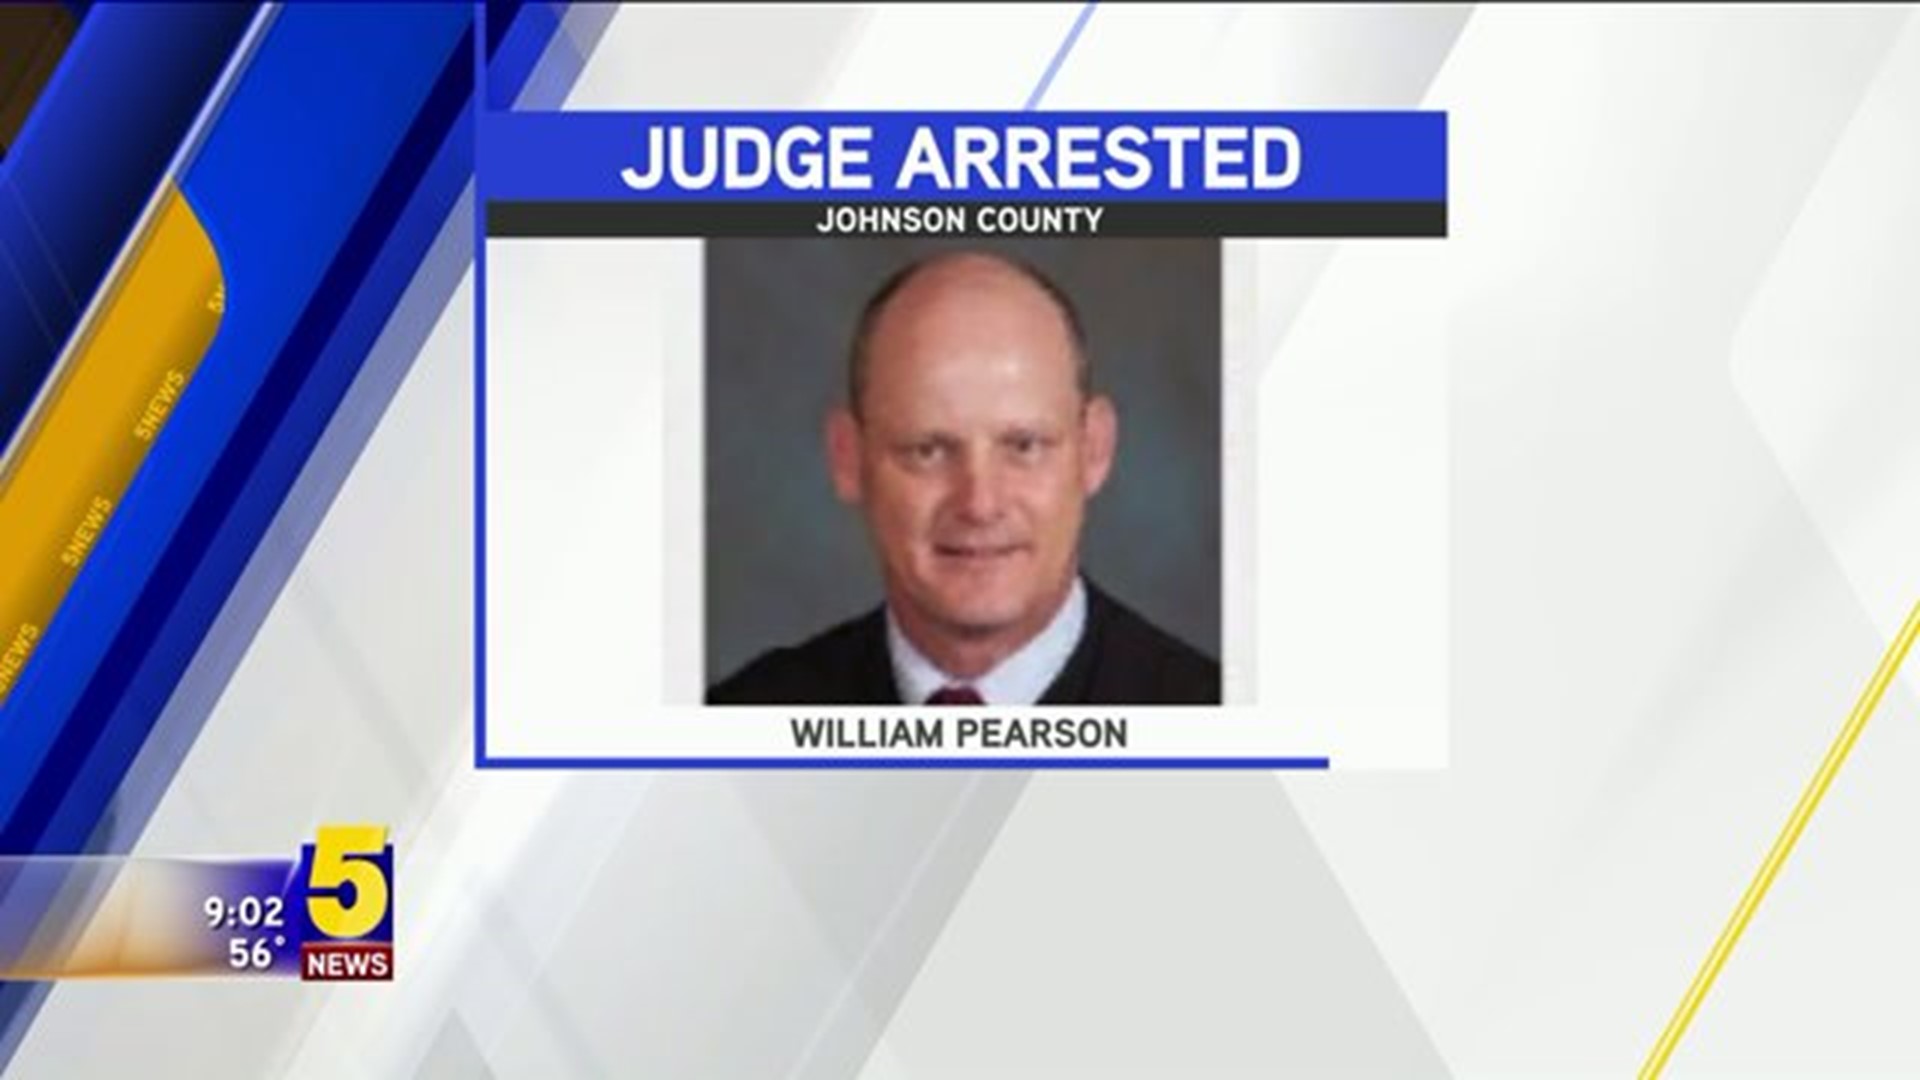 Judge William Pearson Arrested For DWI